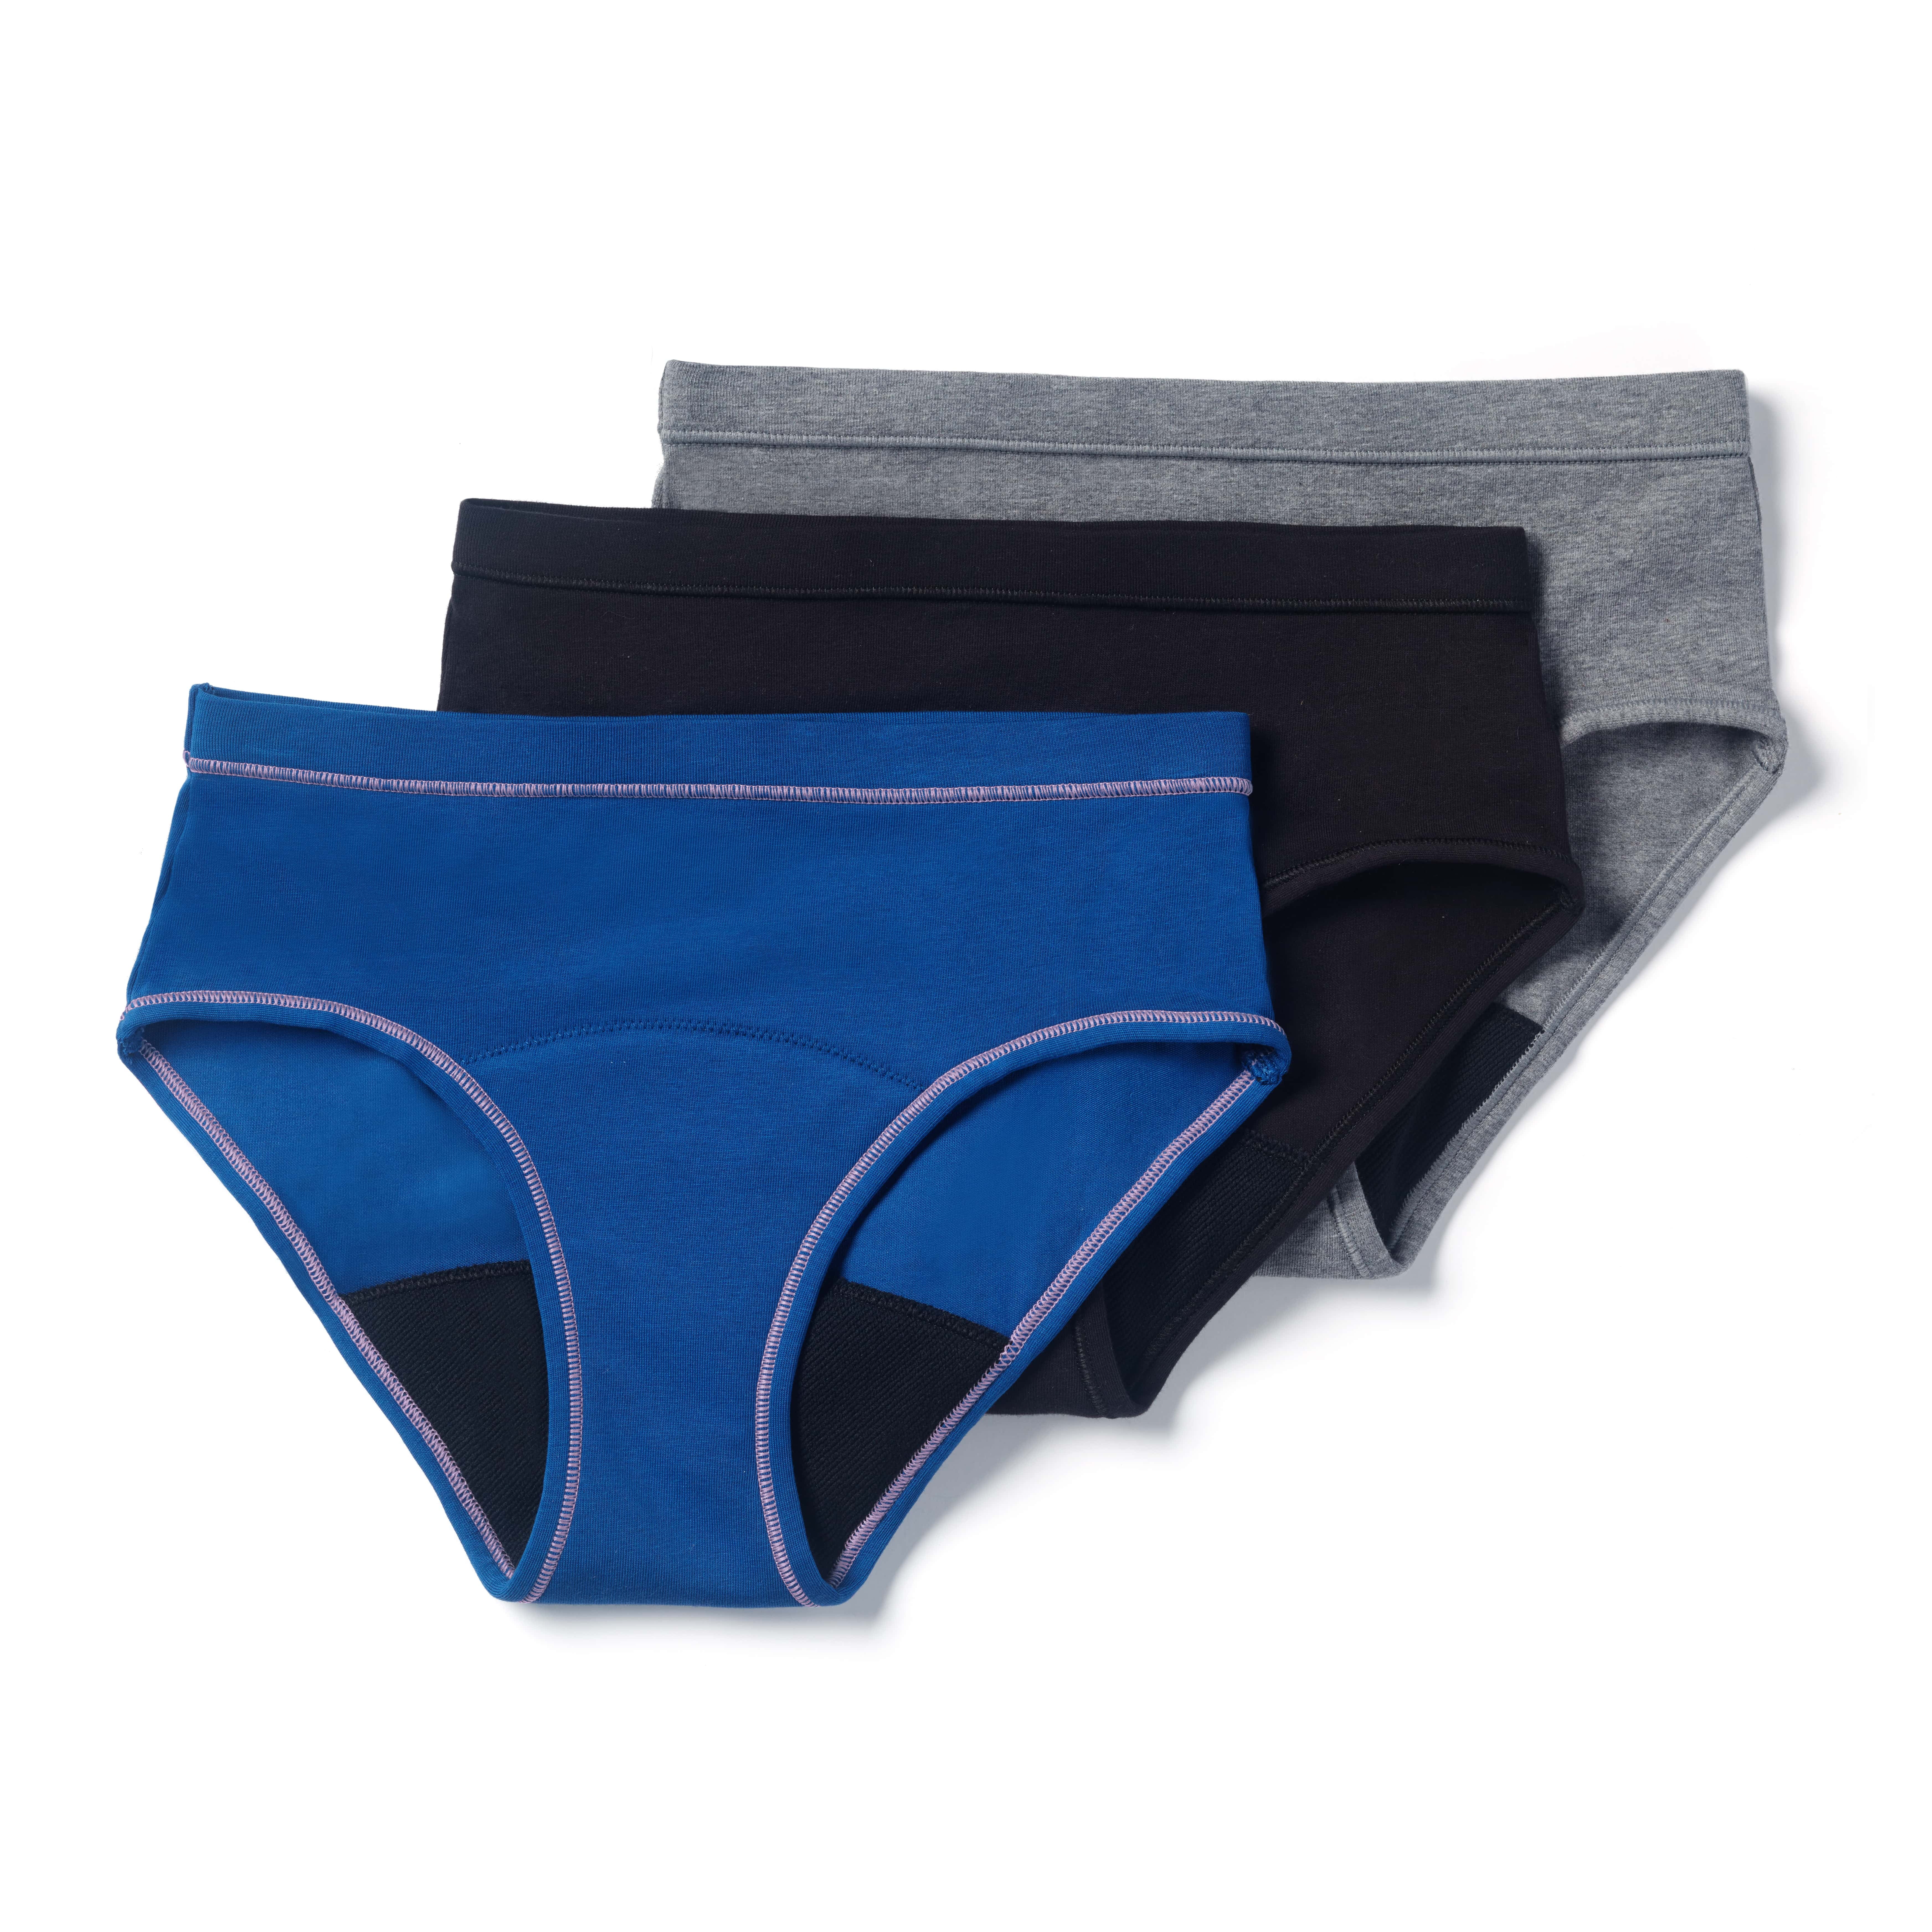 Boyshort Period Underwear For Women, Period Panties, FSA HSA Approved  Feminine Care, Menstrual Underwear Holds 4 Tampons, Navy, 4X